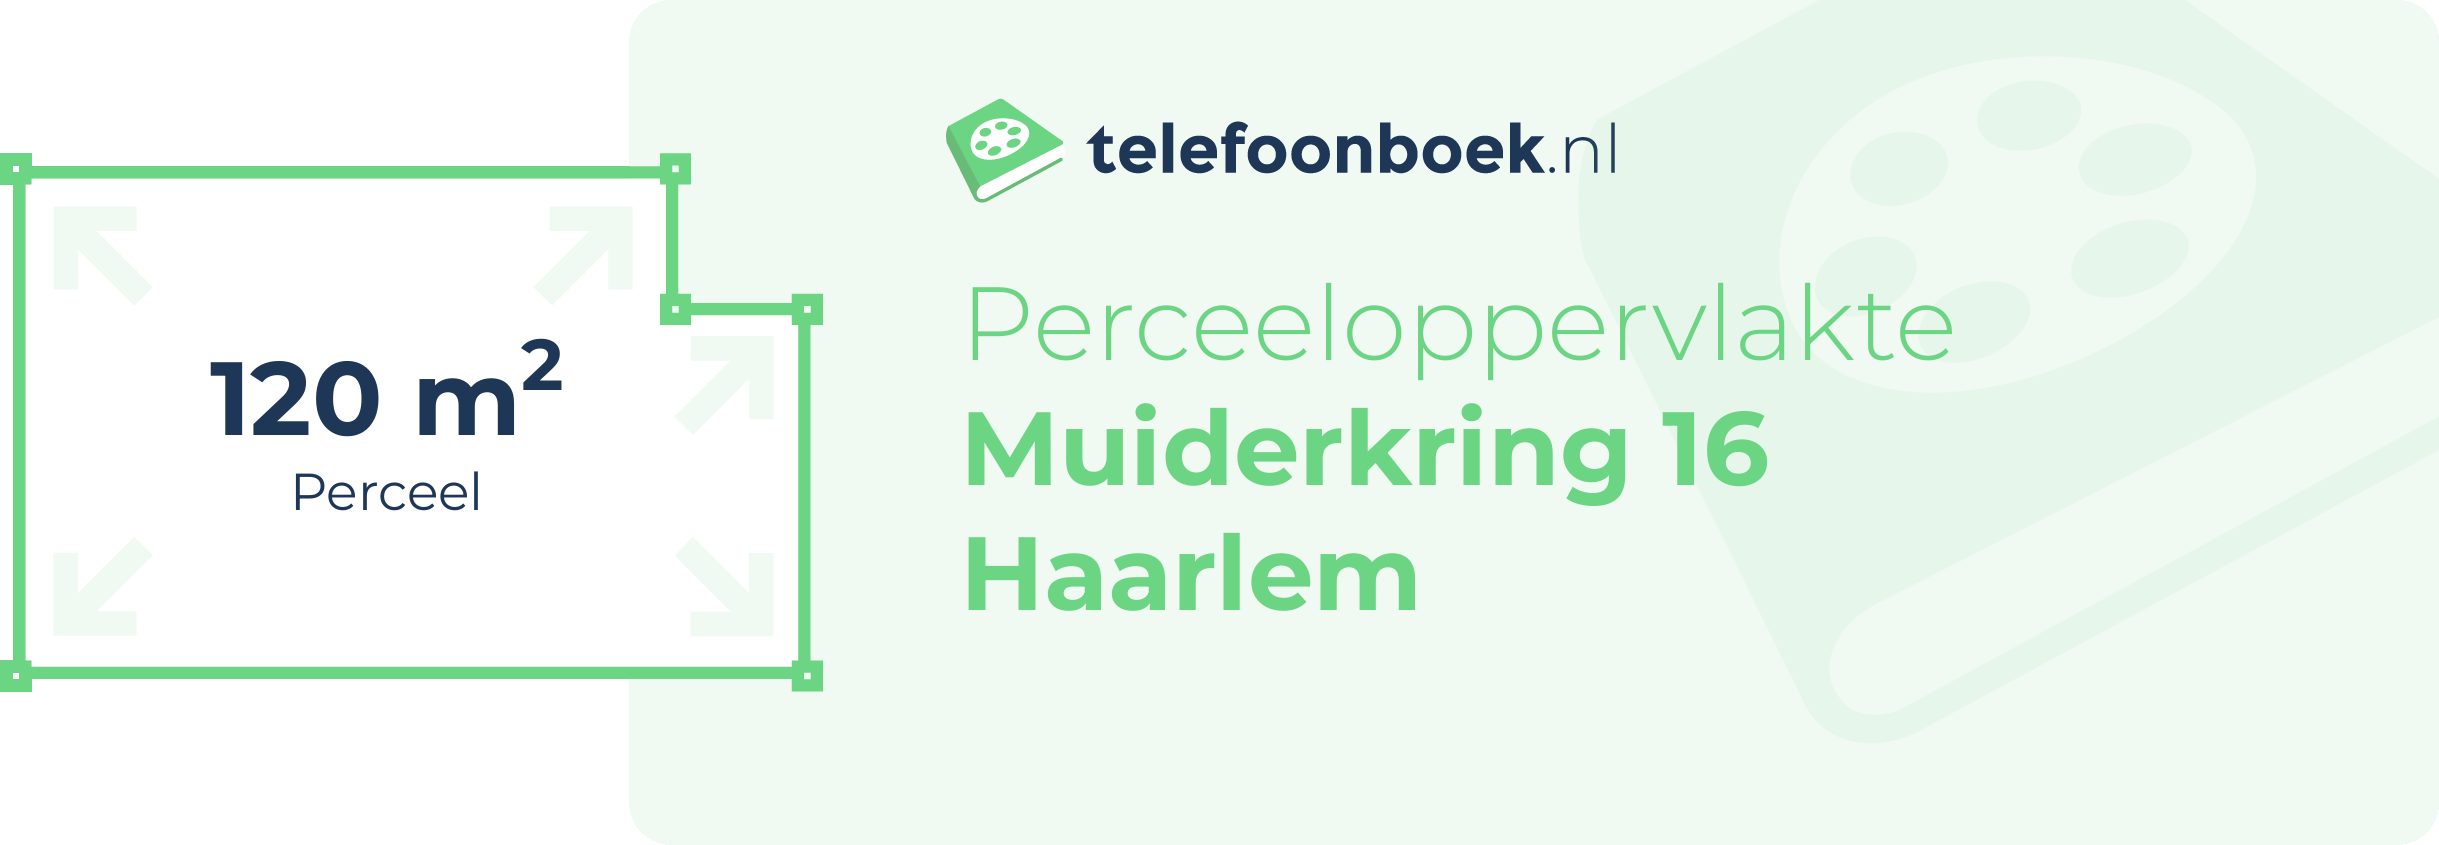 Perceeloppervlakte Muiderkring 16 Haarlem